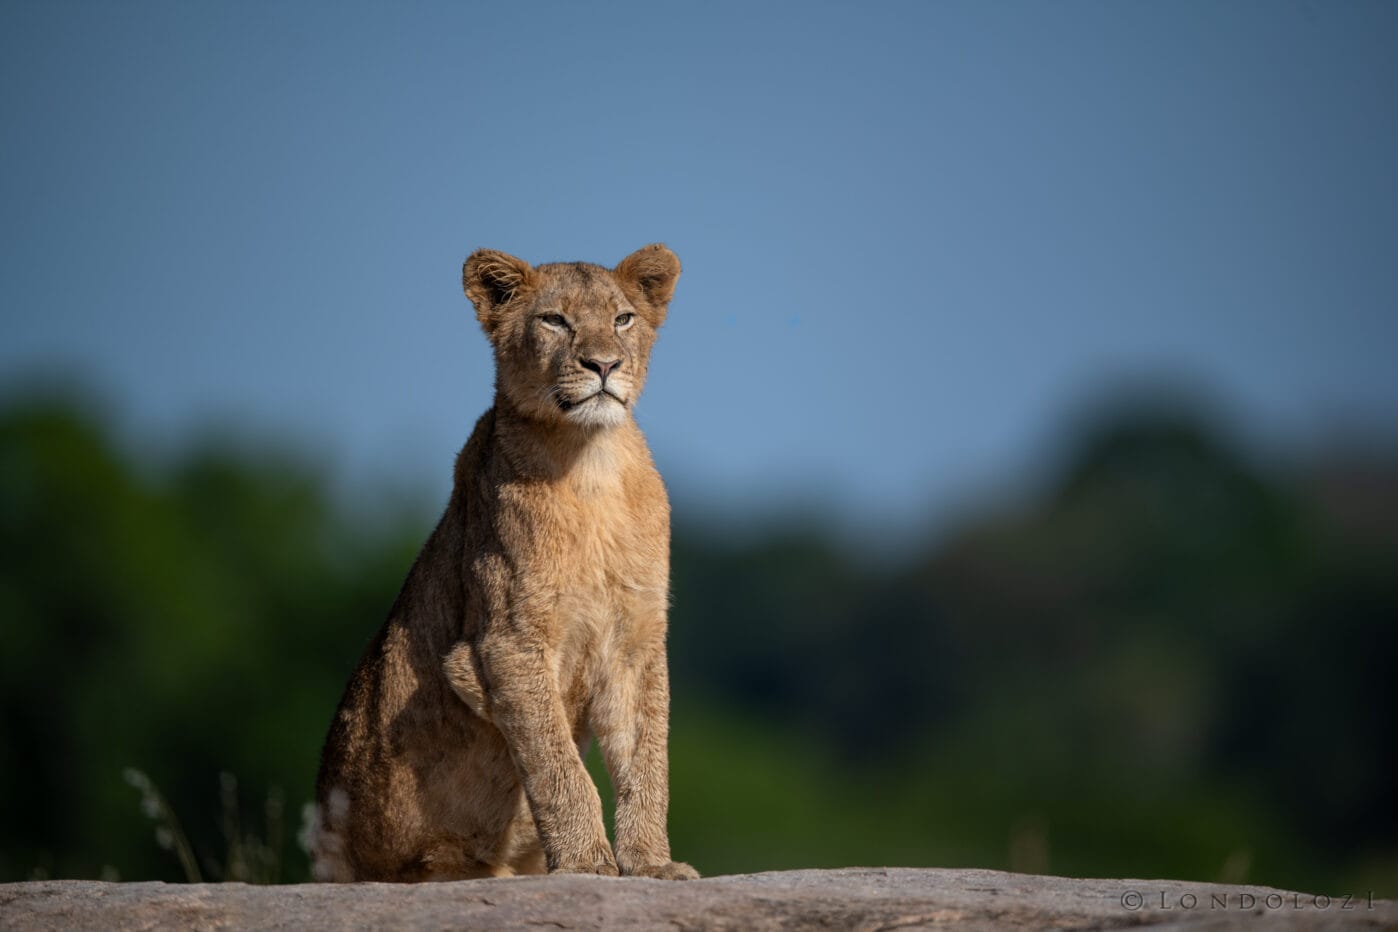 Kng Lion Kambula Cub On Plaque Rock